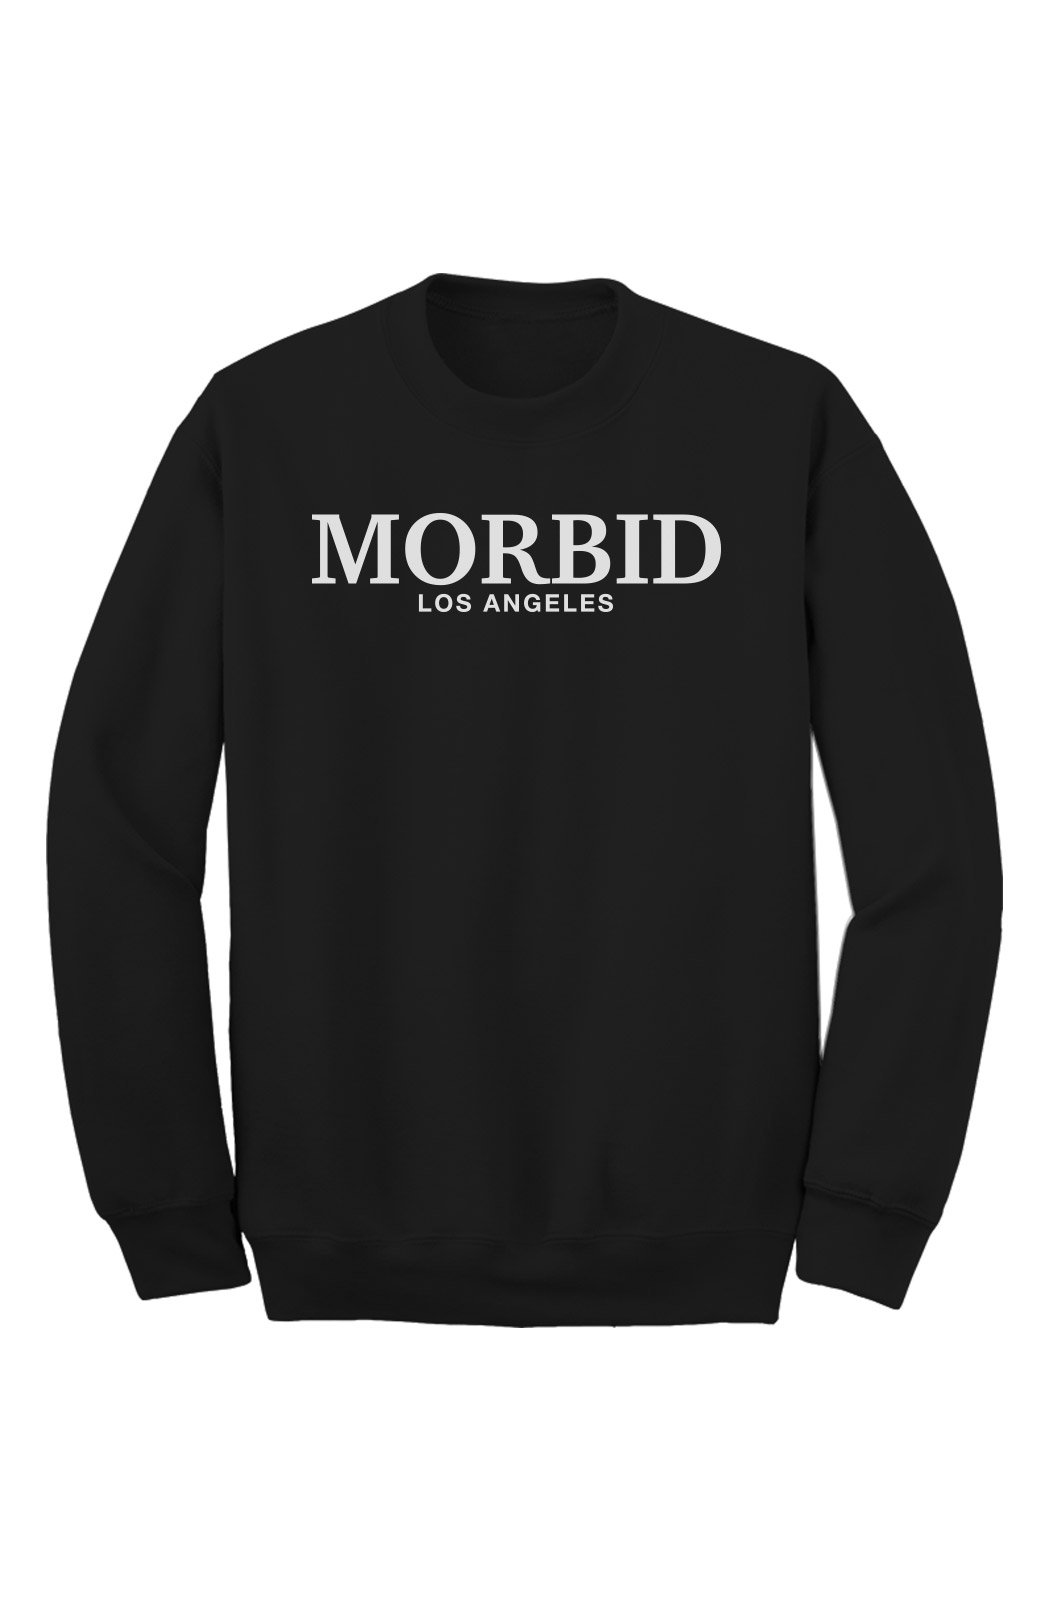 MORBID Los Angeles Clothing Black Fancy Type Crew Sweater Streetwear